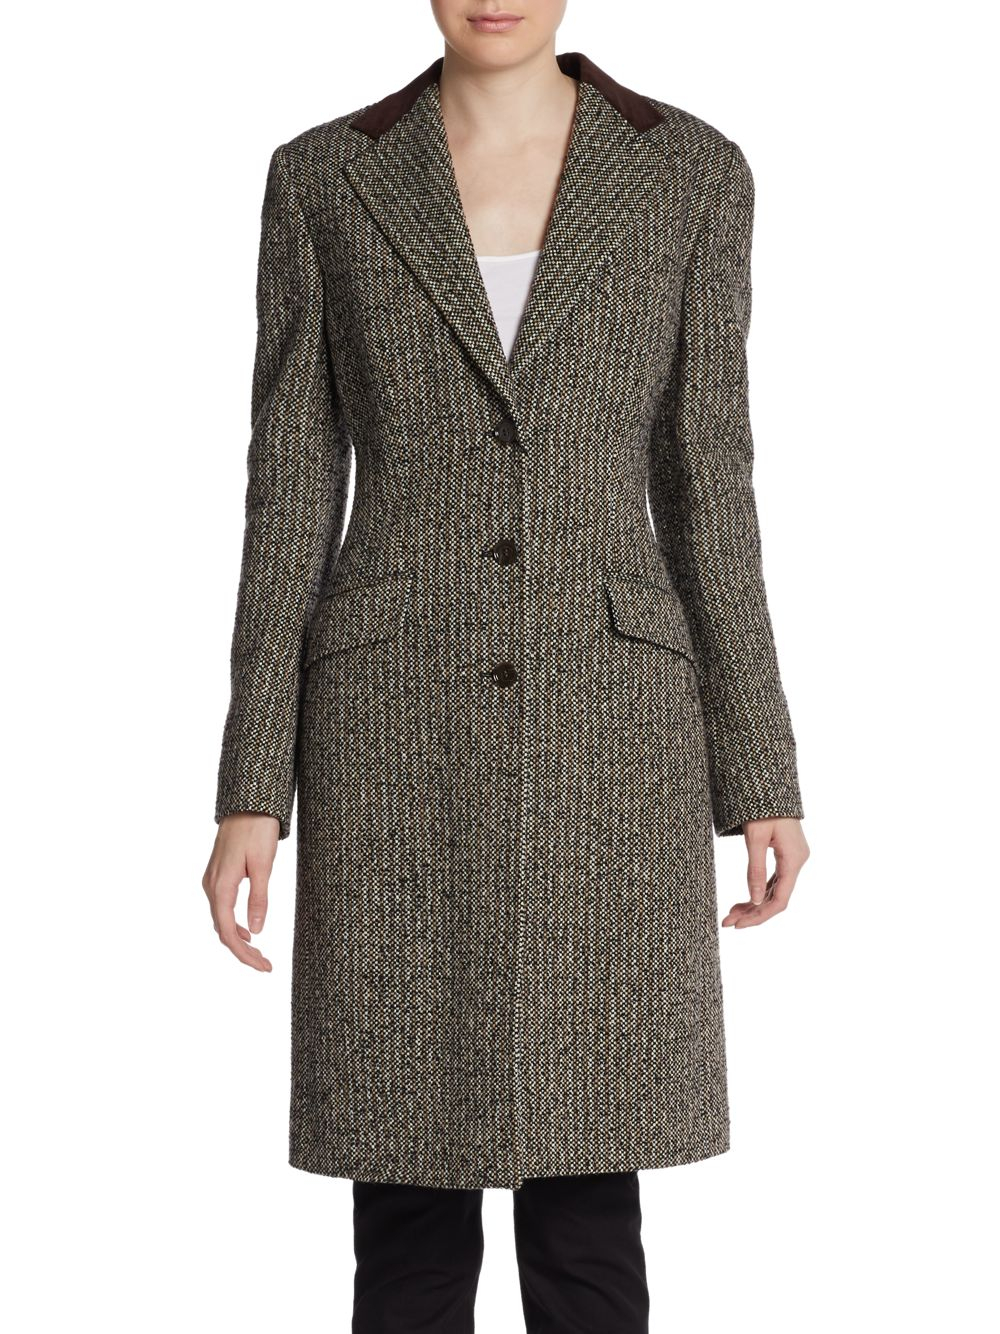 Dolce & Gabbana Wool Blend Tweed Long Jacket in Brown | Lyst